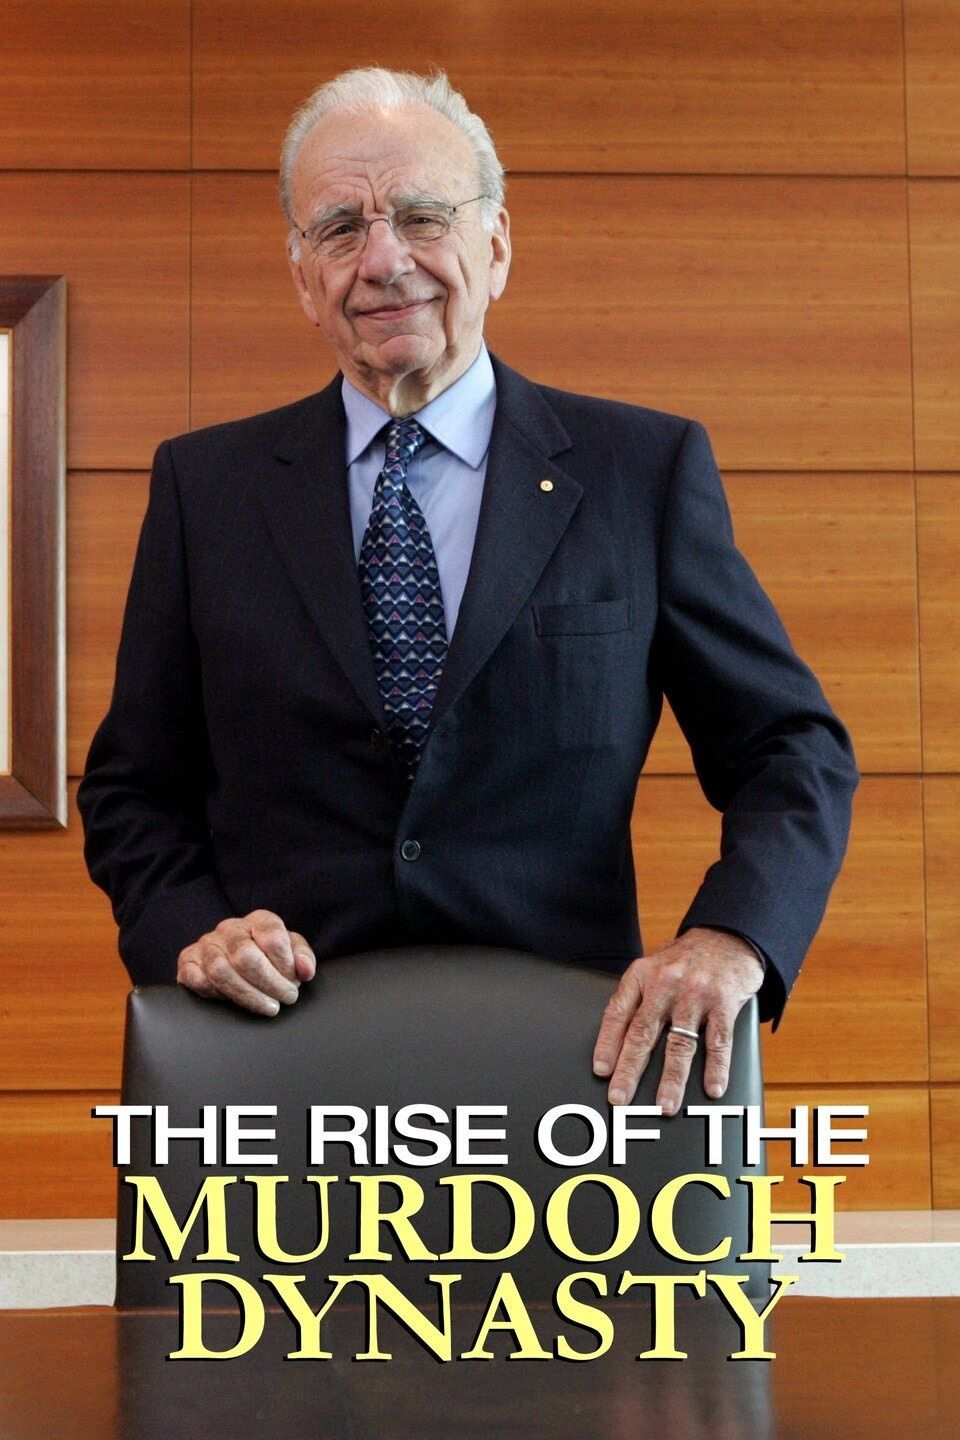 The Rise of the Murdoch Dynasty ne zaman